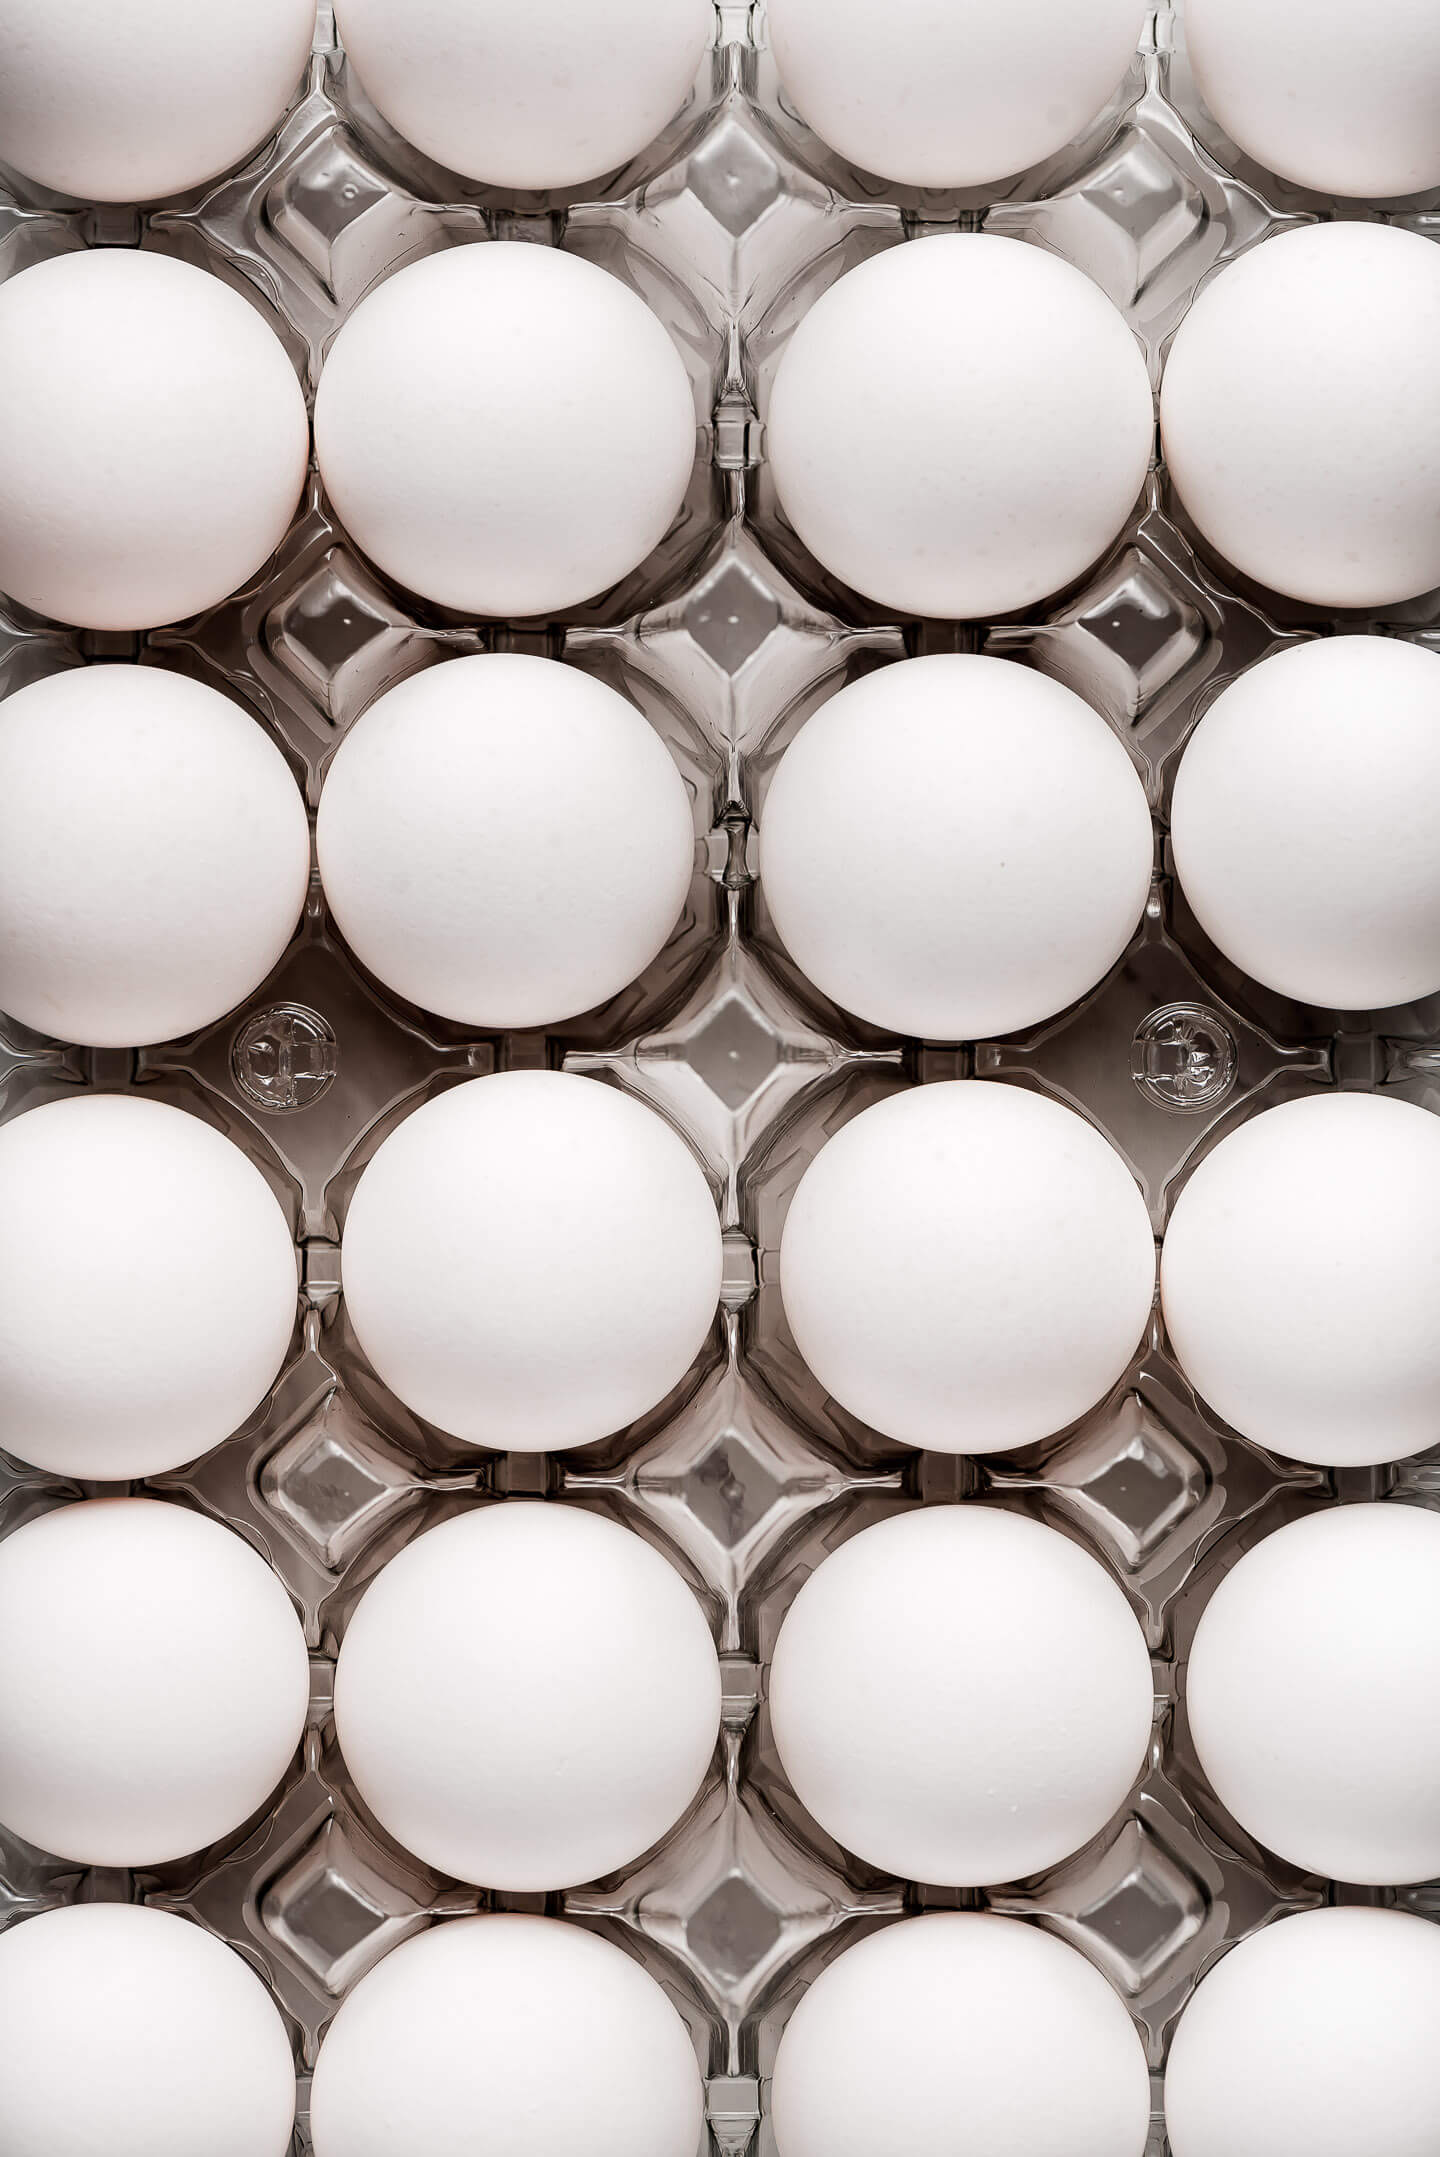 Many eggs in an egg carton.